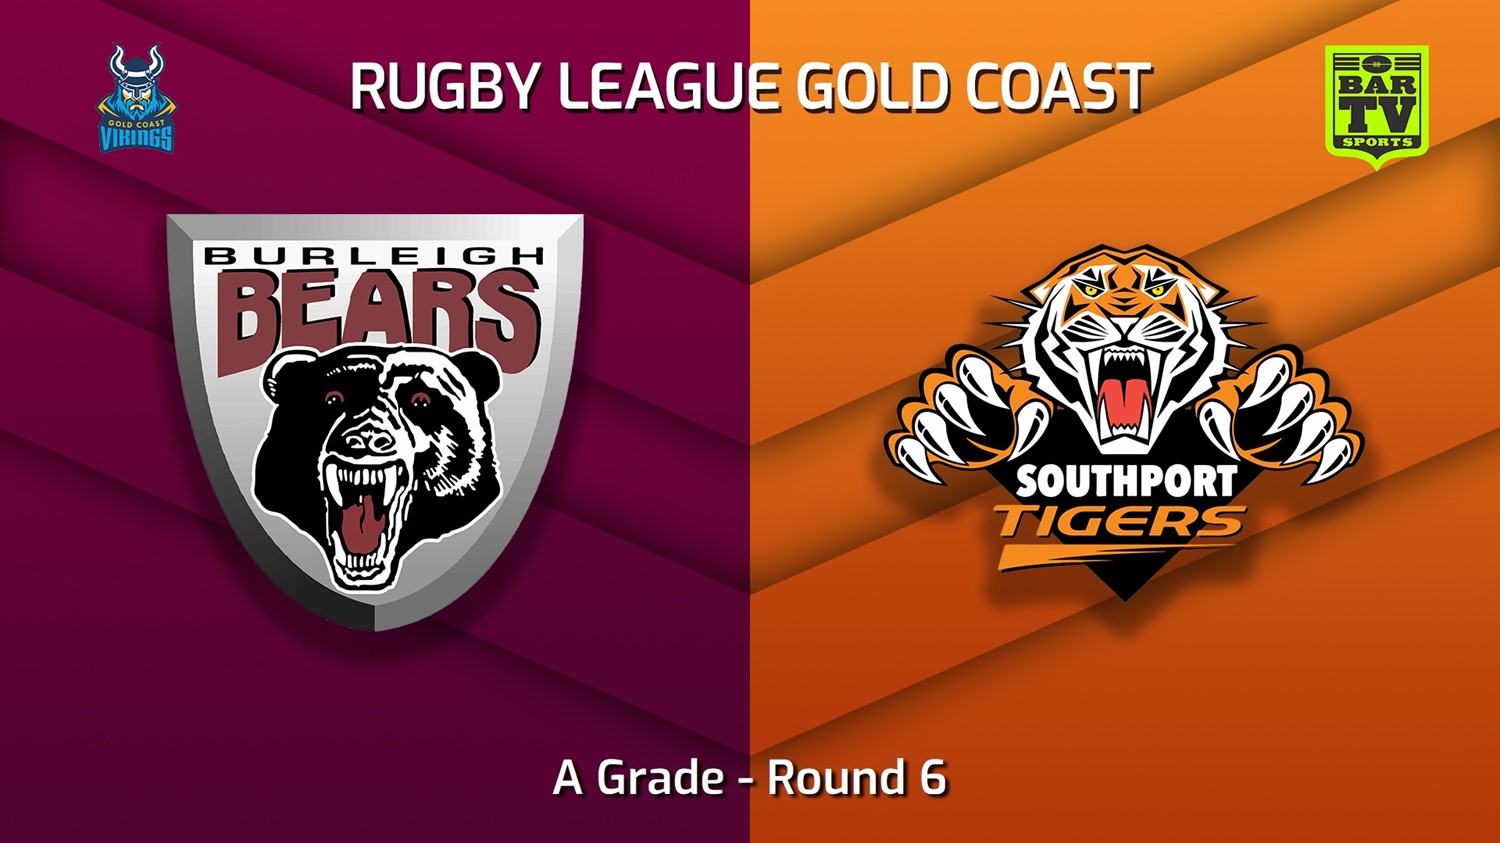 230528-Gold Coast Round 6 - A Grade - Burleigh Bears v Southport Tigers Minigame Slate Image